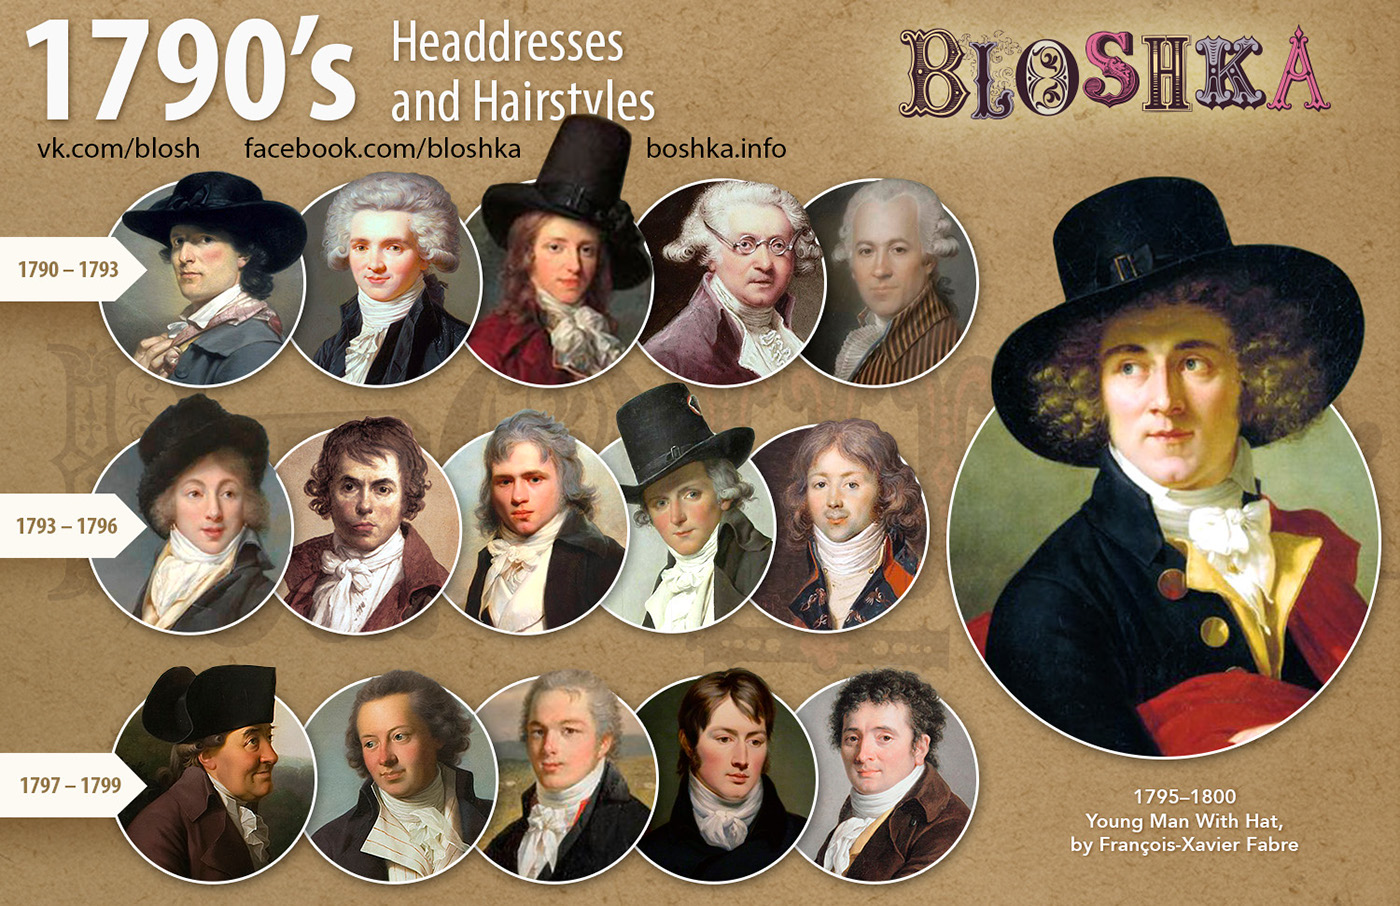 history fashion 18th cenury 1700's hairstyles headdresses